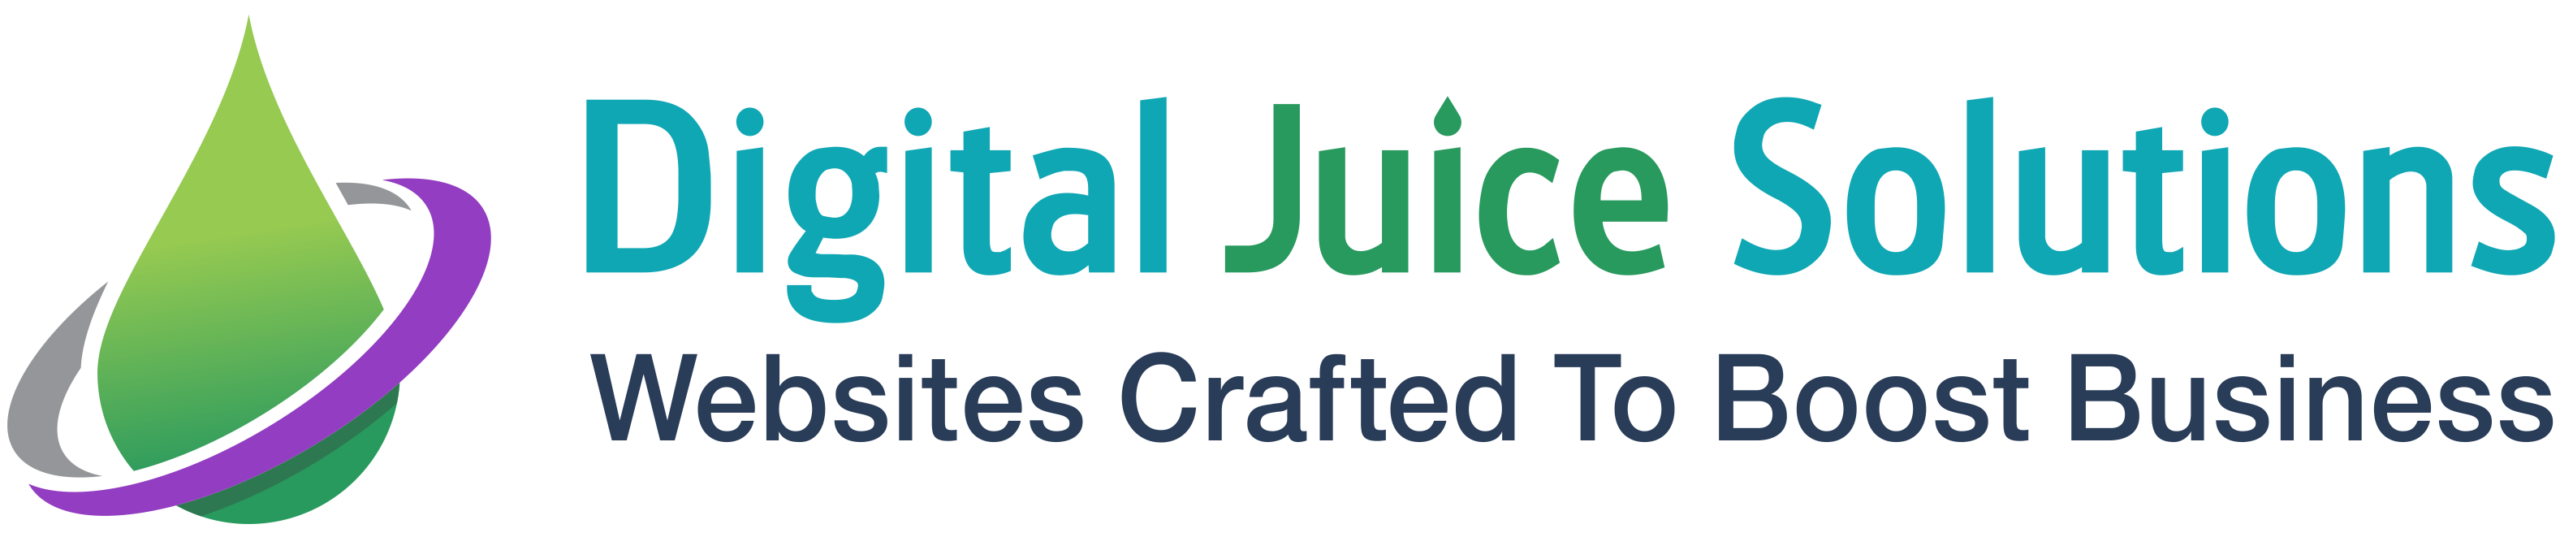 Digital Juice Solutions